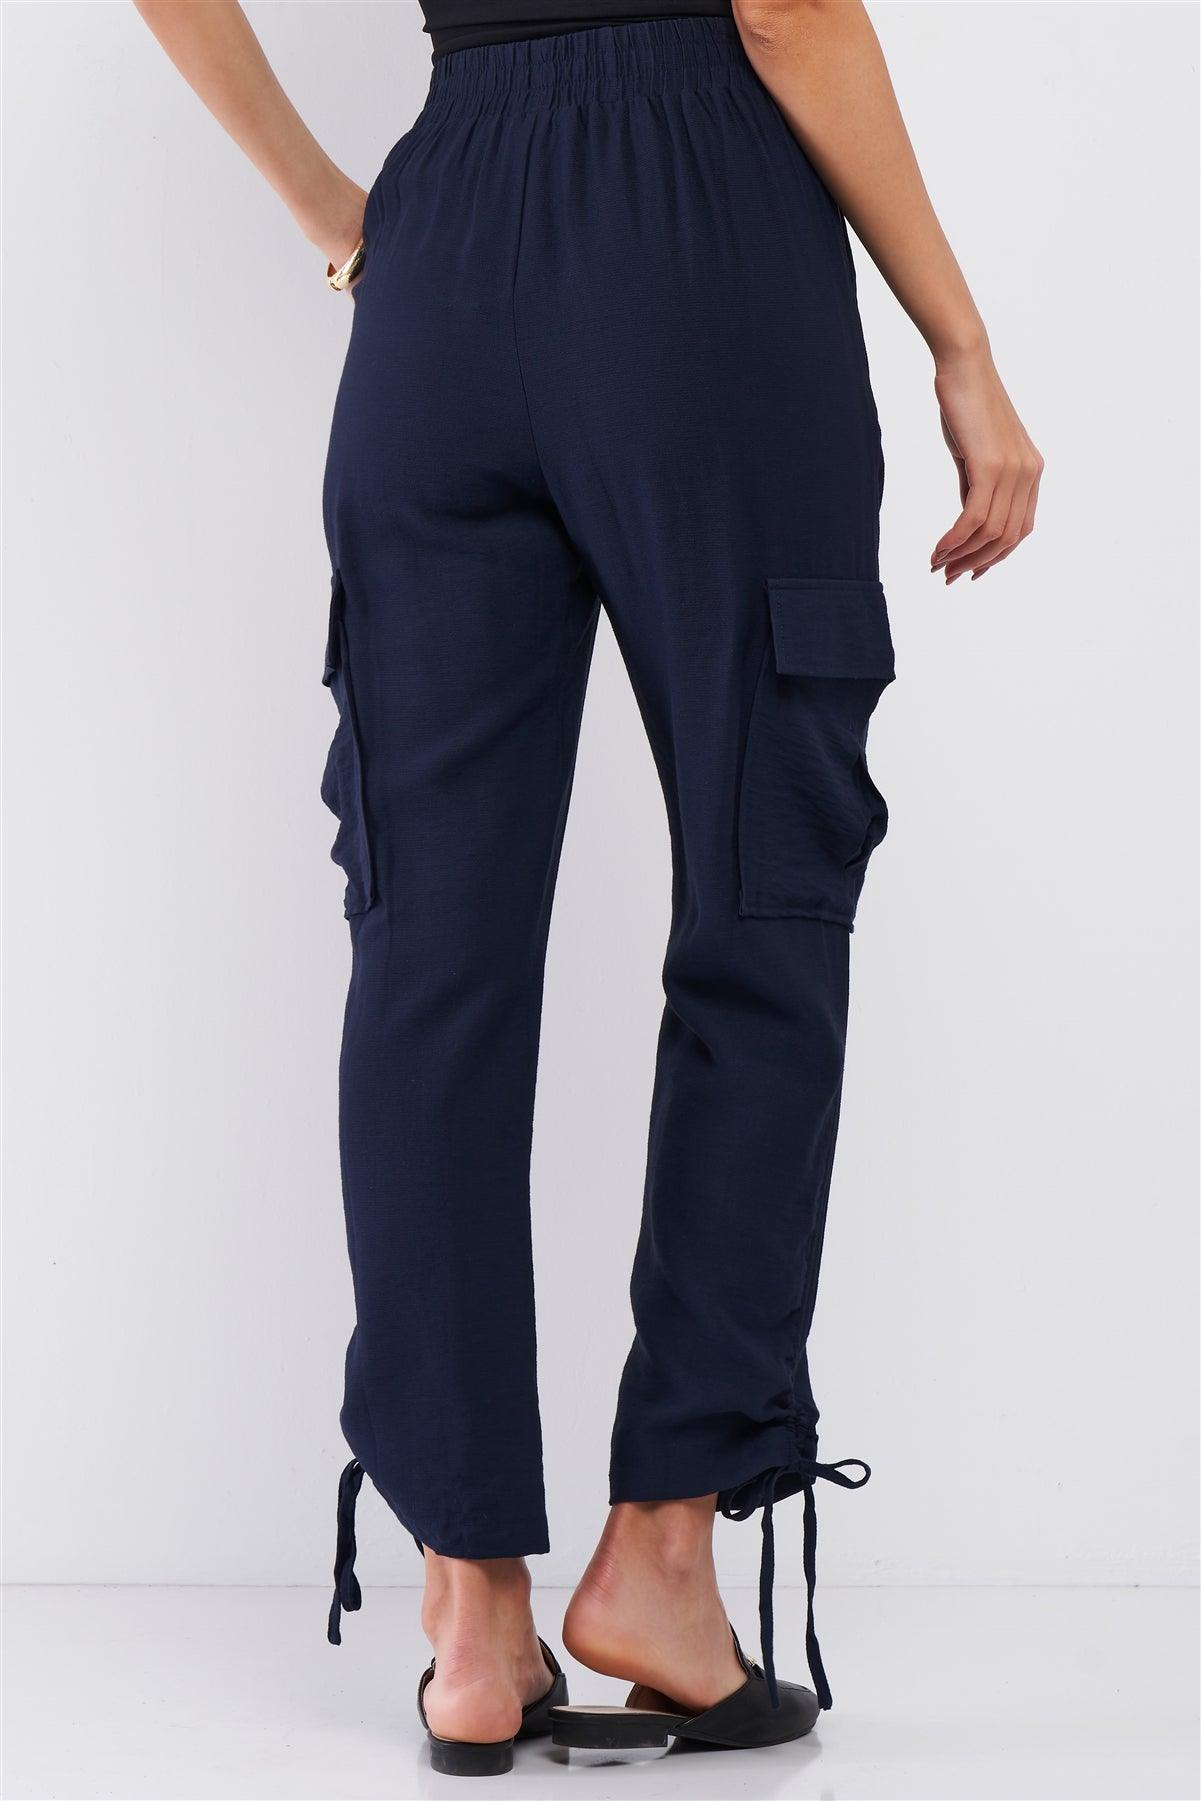 Navy Elastic Draw String Tie High Waist Two Side Leg Pockets Self-Tie Bottom Drawstring Jogger Pants /2-2-2